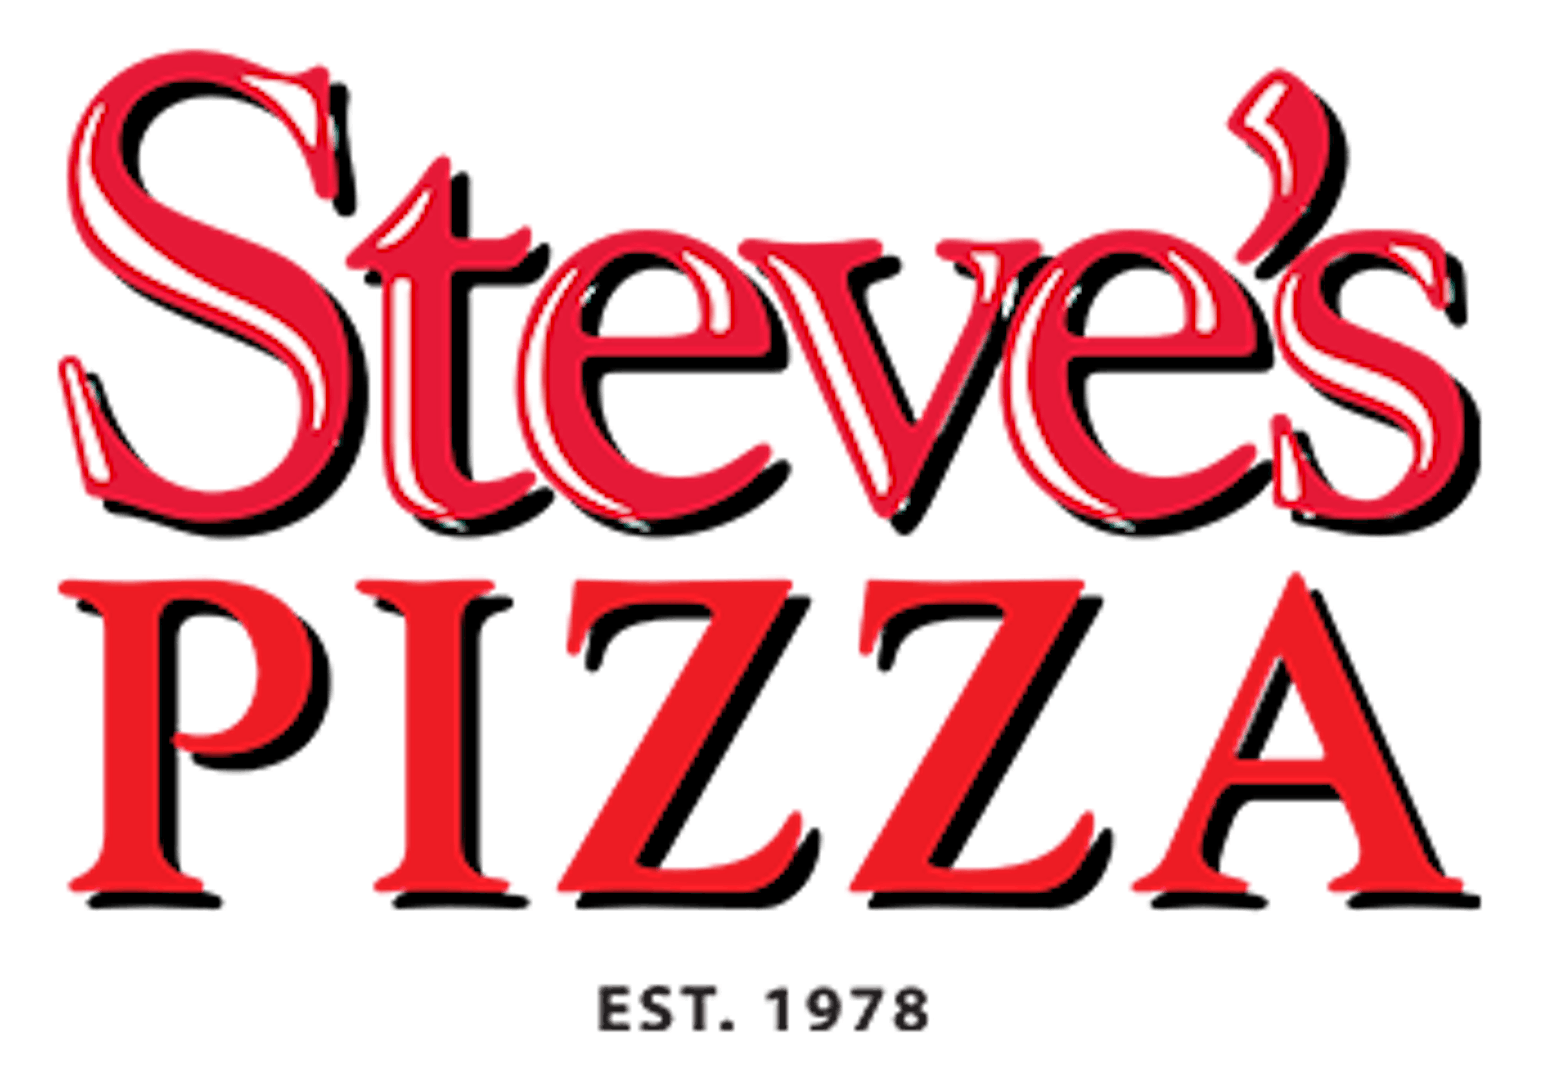 Steve's Pizza (Elk Grove)